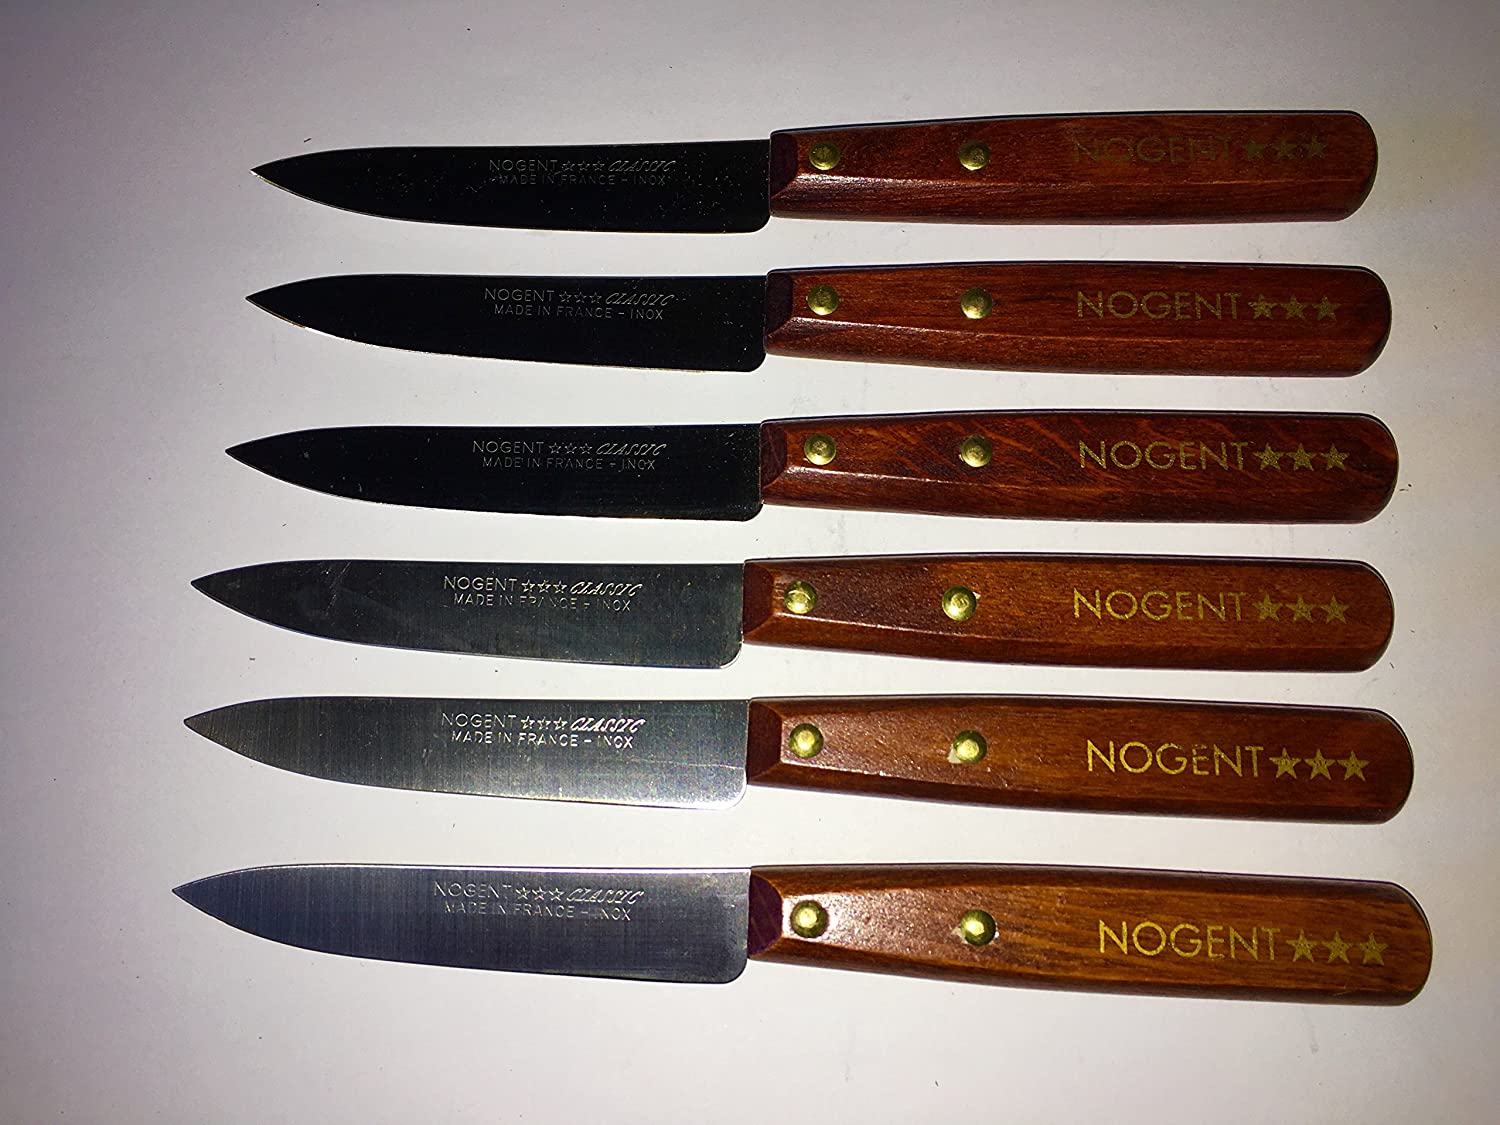 NOGENT Lot de 6 Couteaux Lisse Bois de Charme/ 6 knives of Nogent 3stars Made in France - ALLWENEEDIS